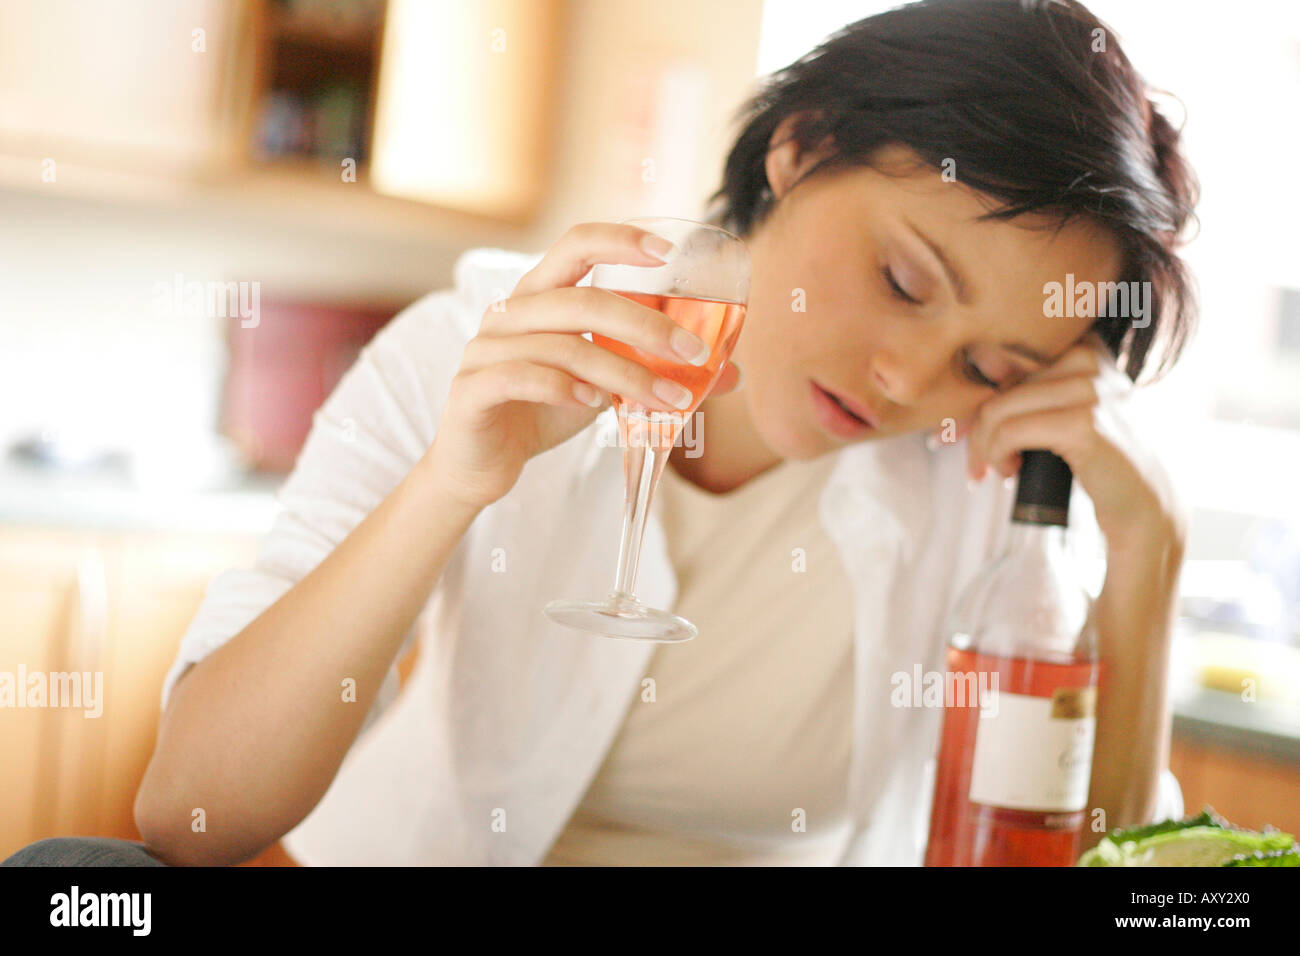 Woman drinking wine Stock Photo